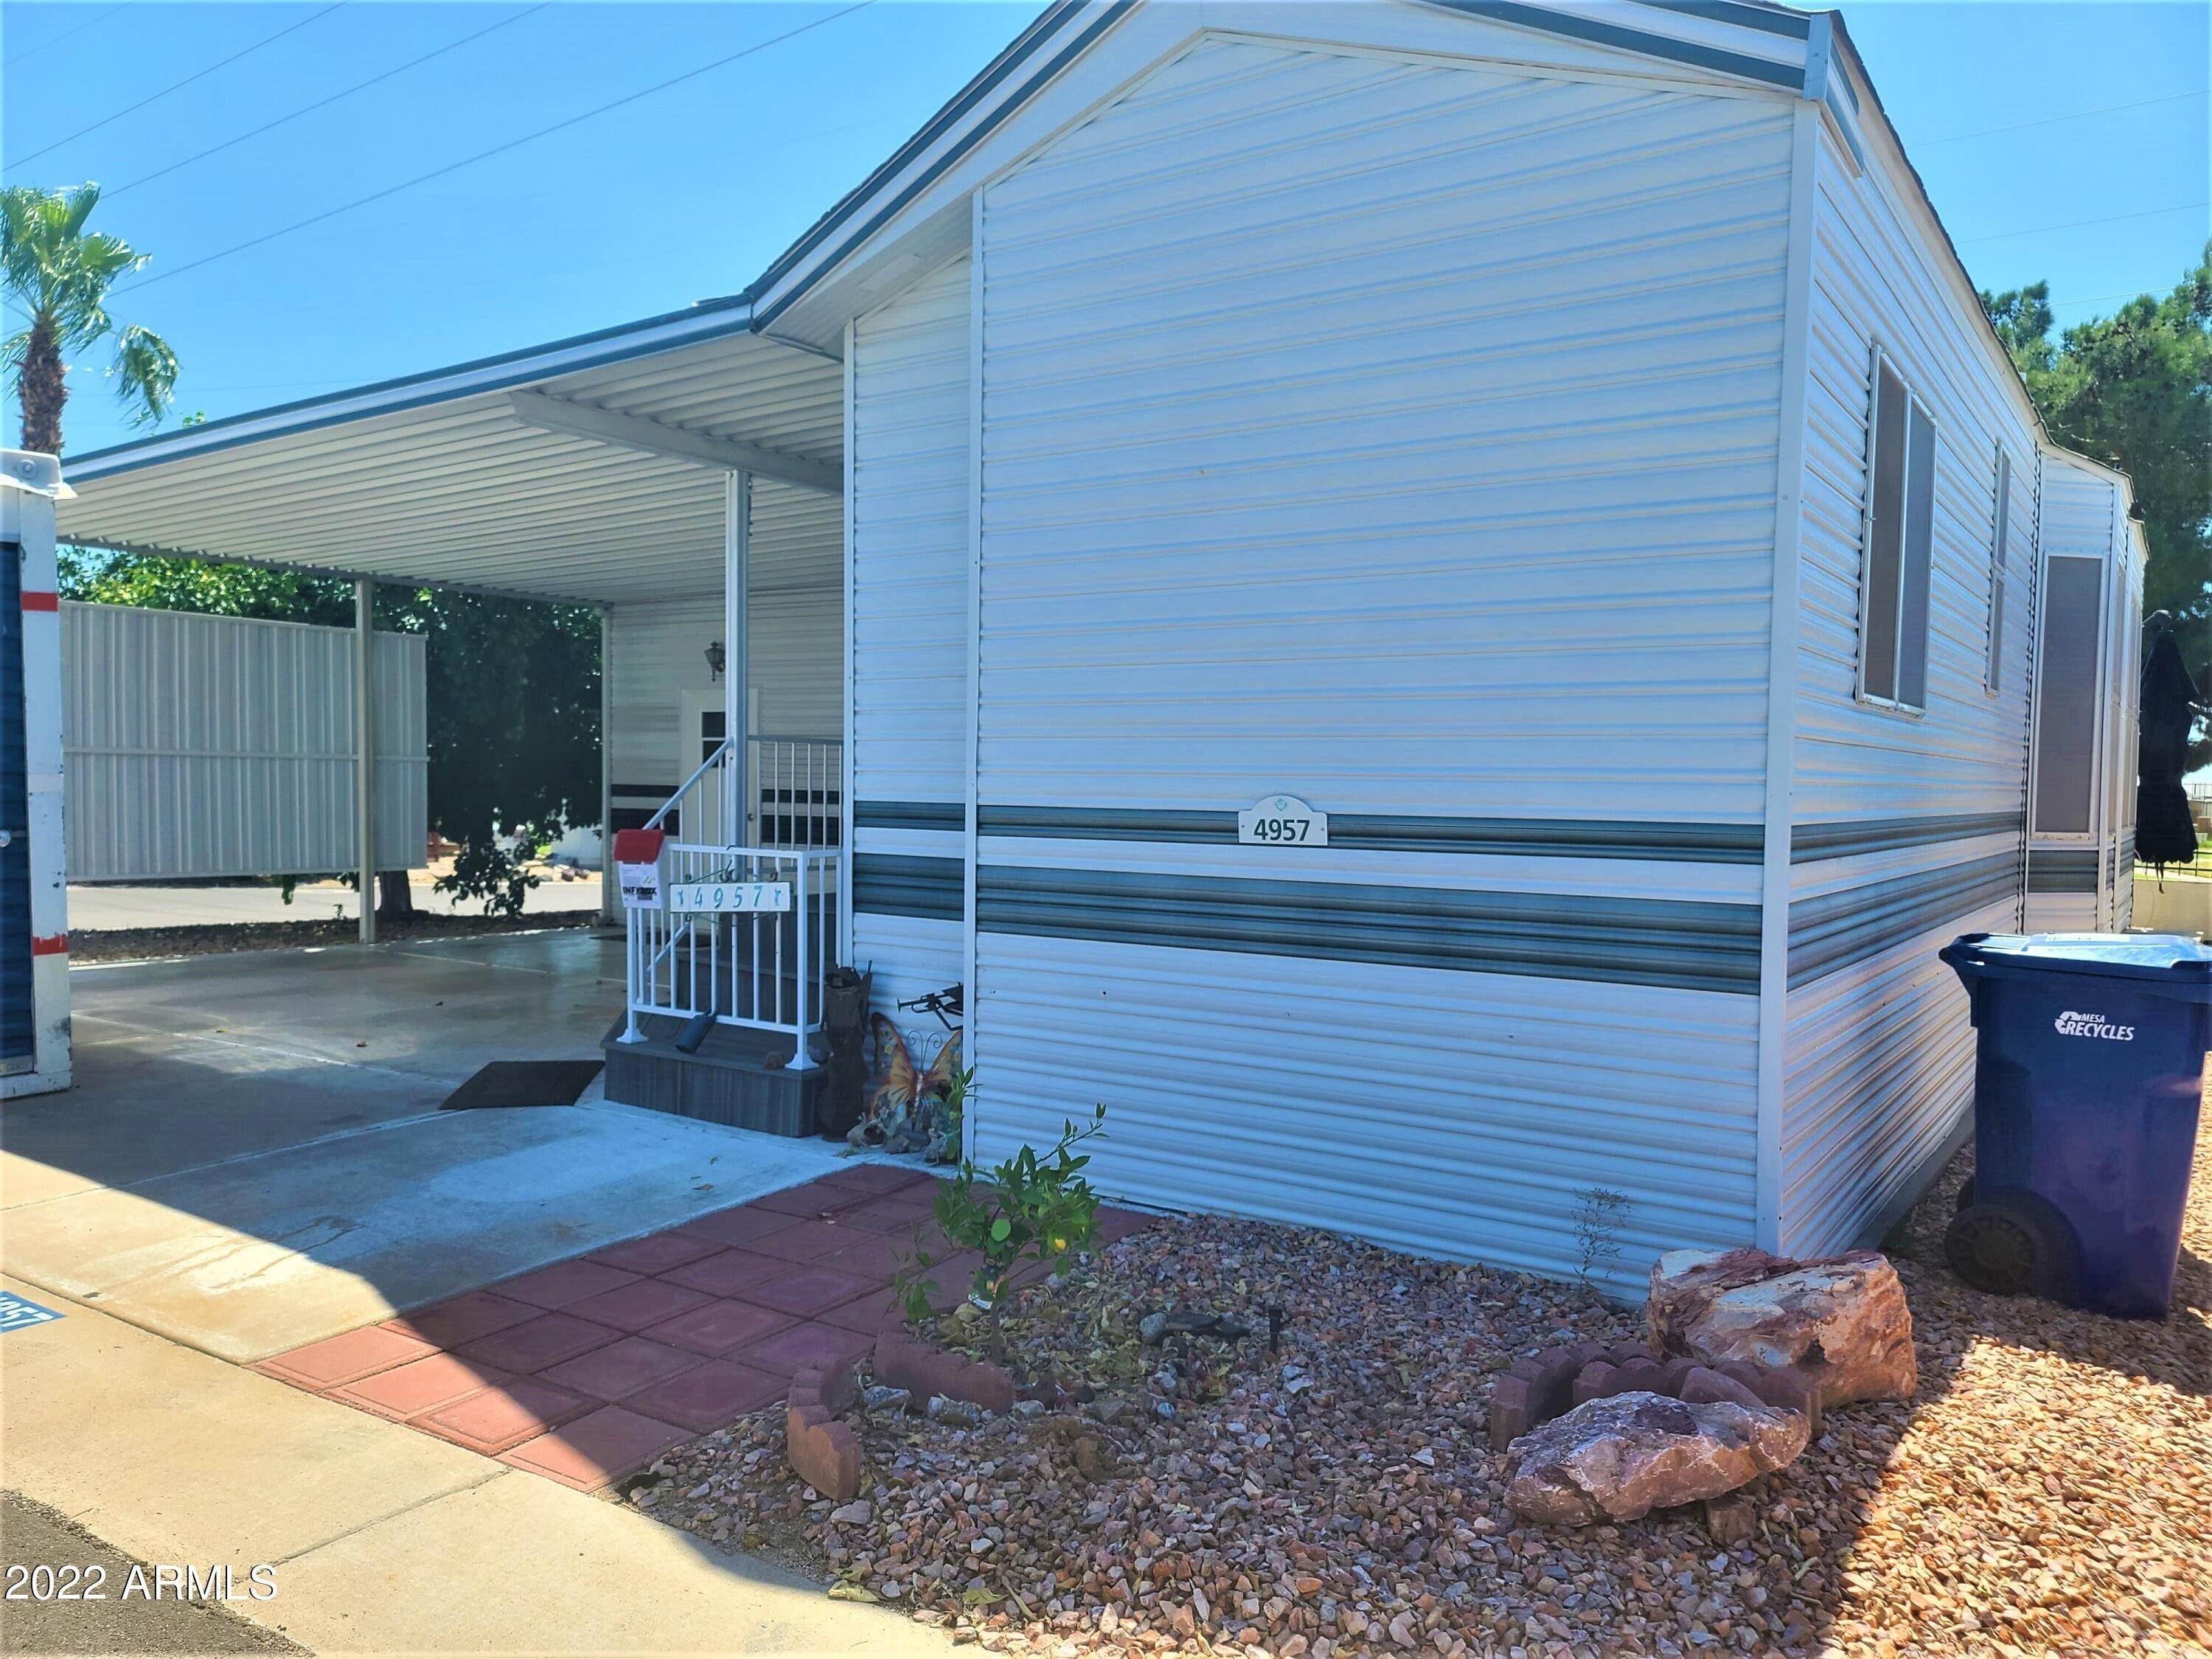 6. Mobile Home for Sale at Mesa, AZ 85207